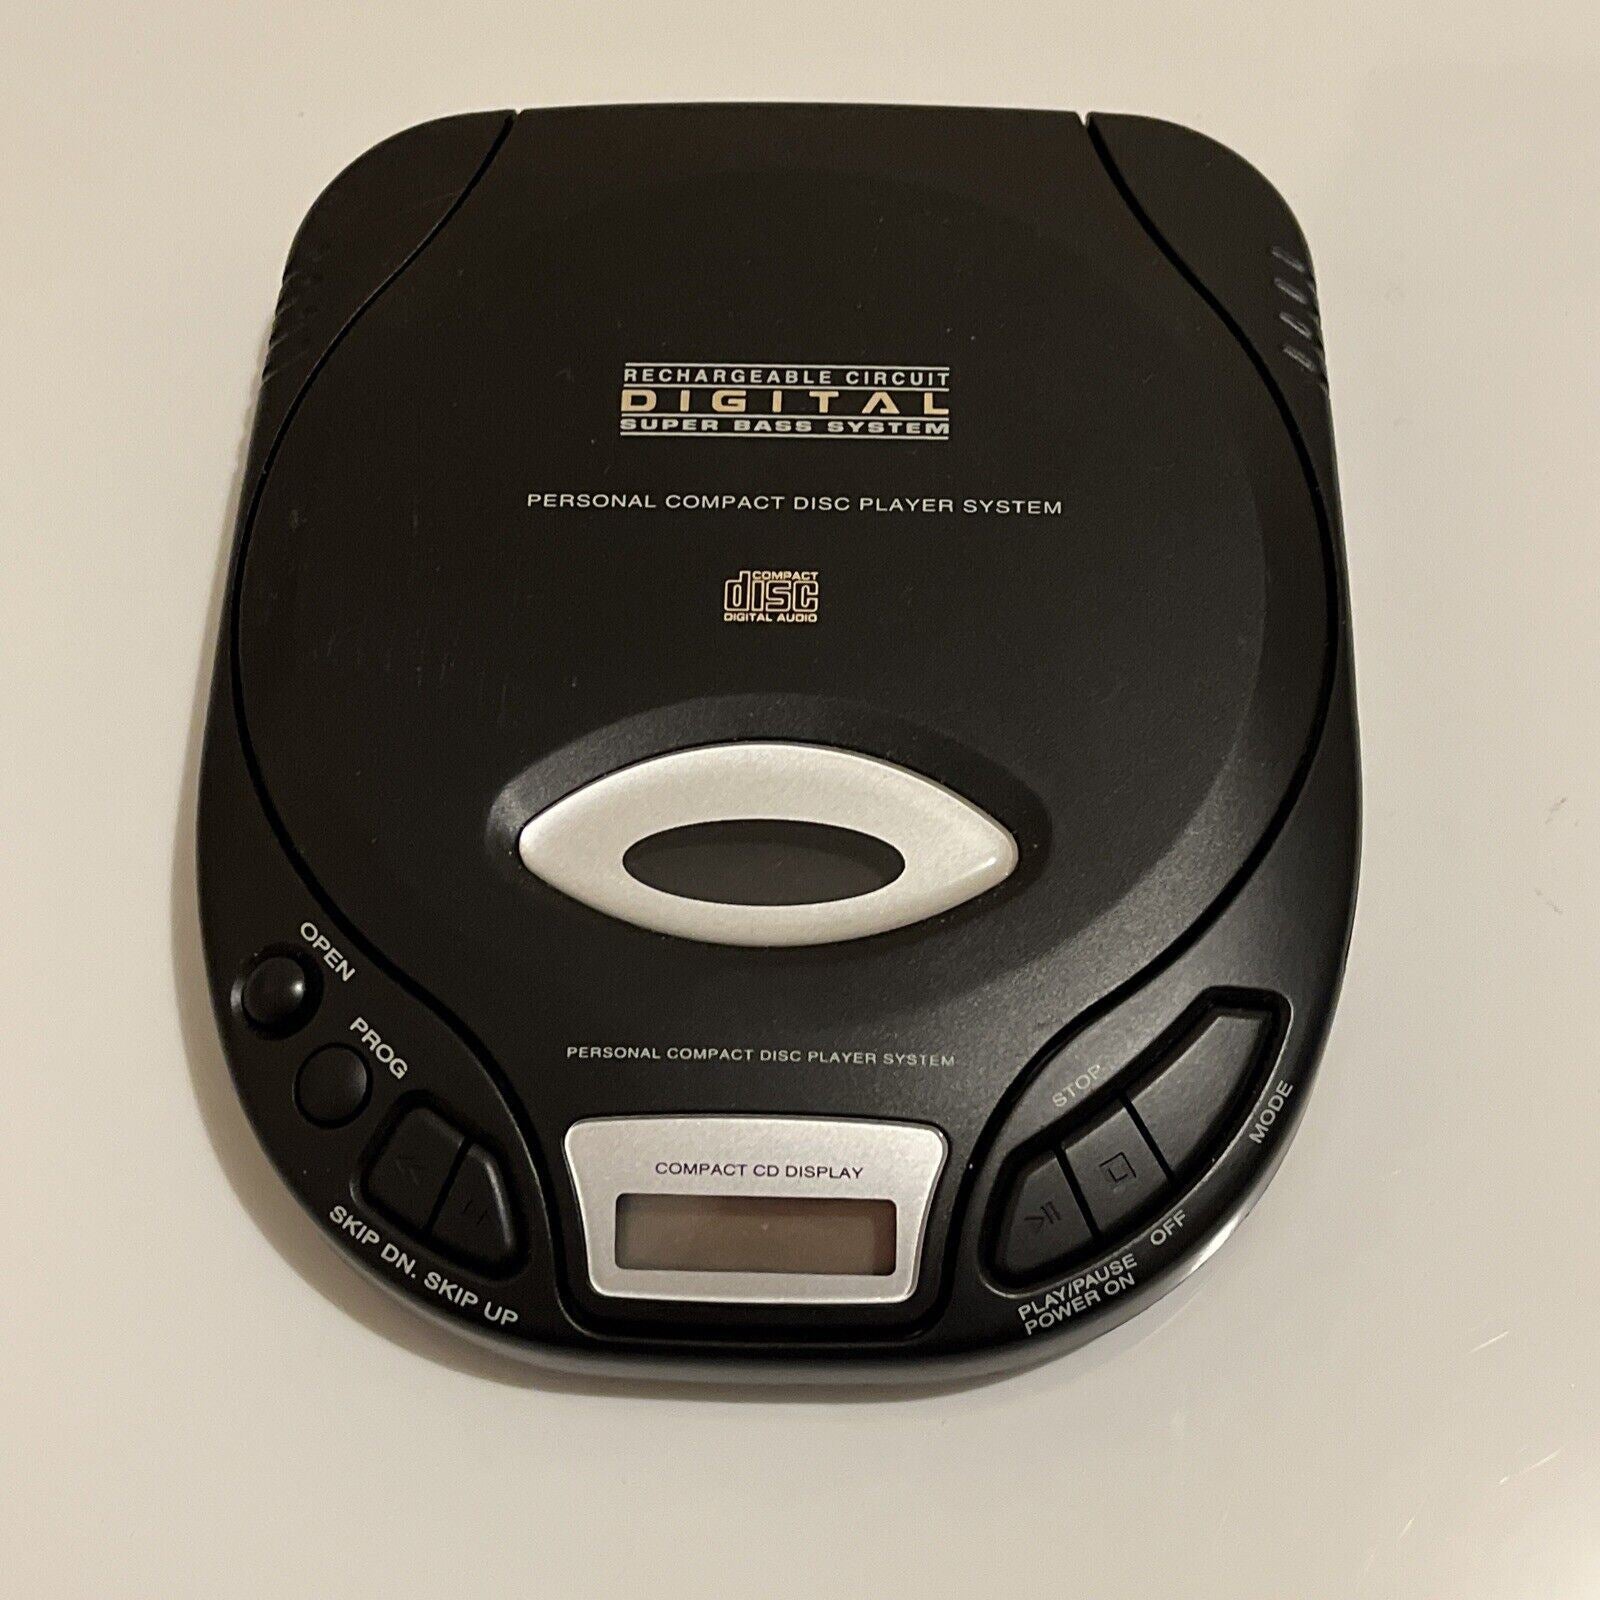 Portable CD Player  Lenoxx Electronics Australia